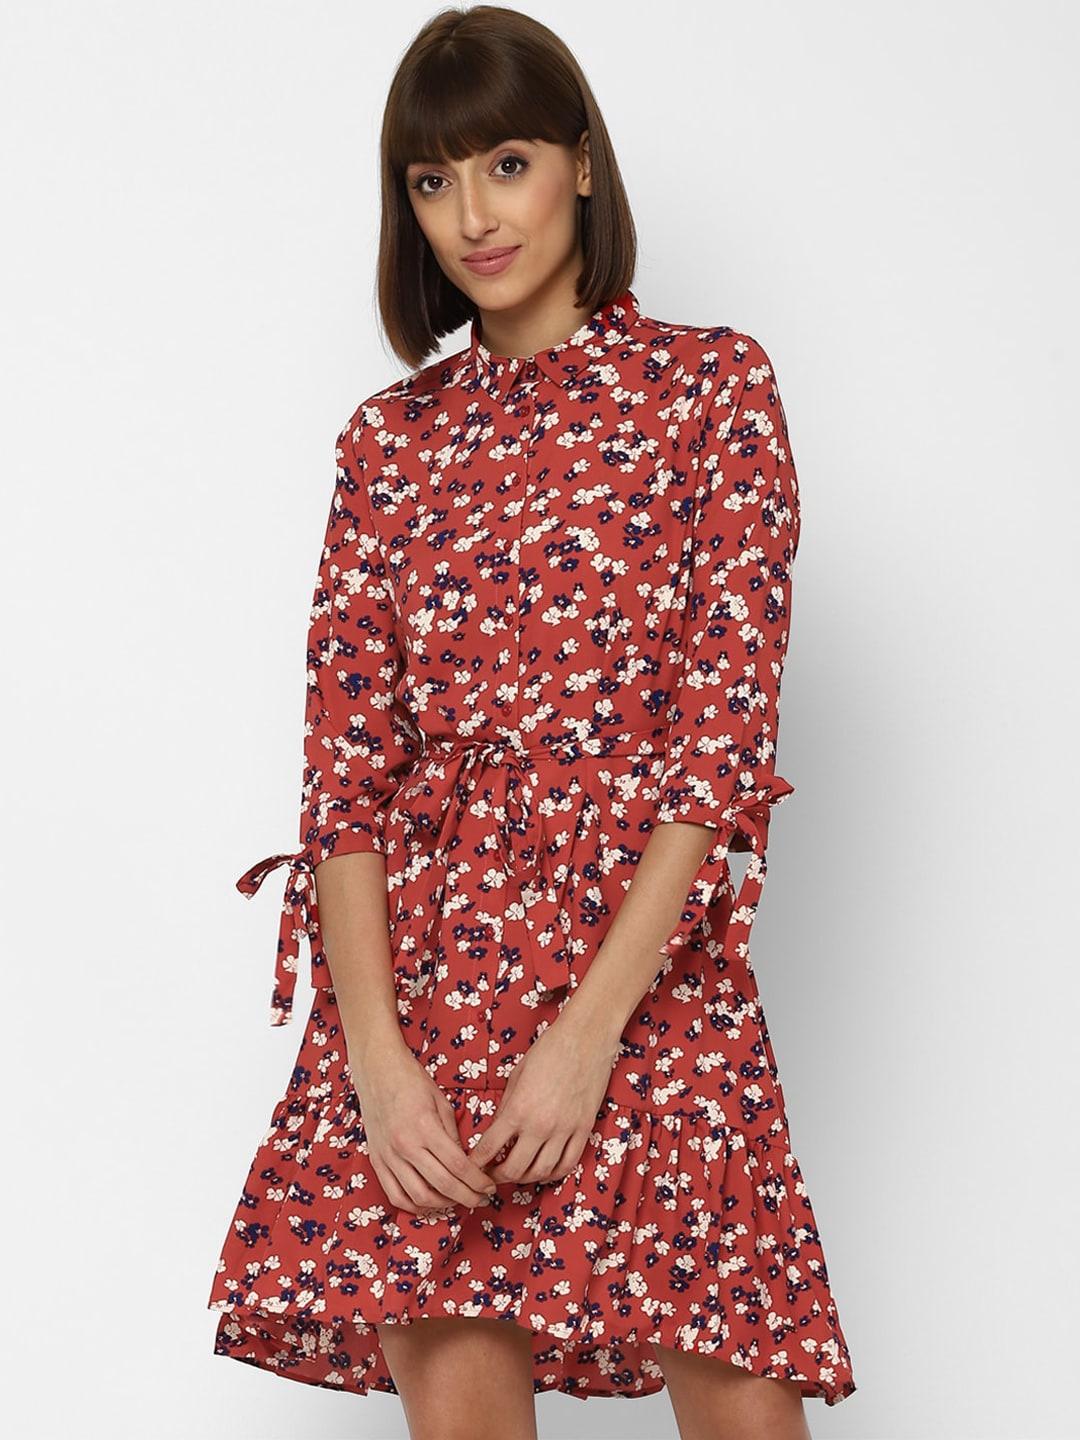 allen-solly-woman-maroon-floral-shirt-dress